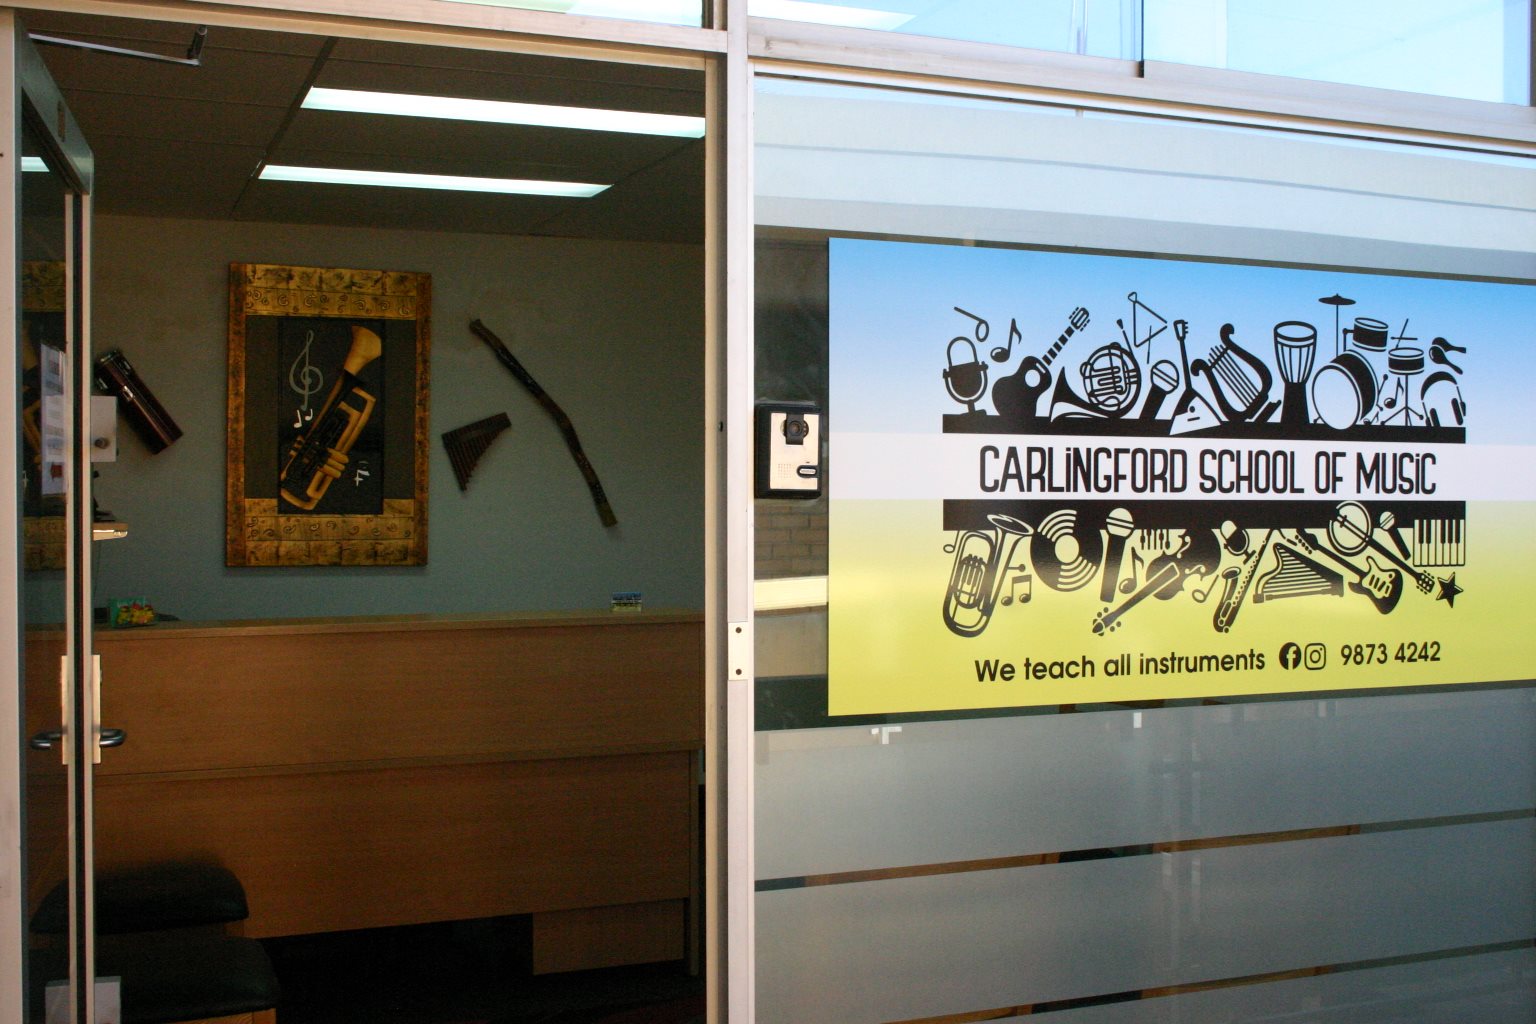 Carlingford School of Music - Entrance